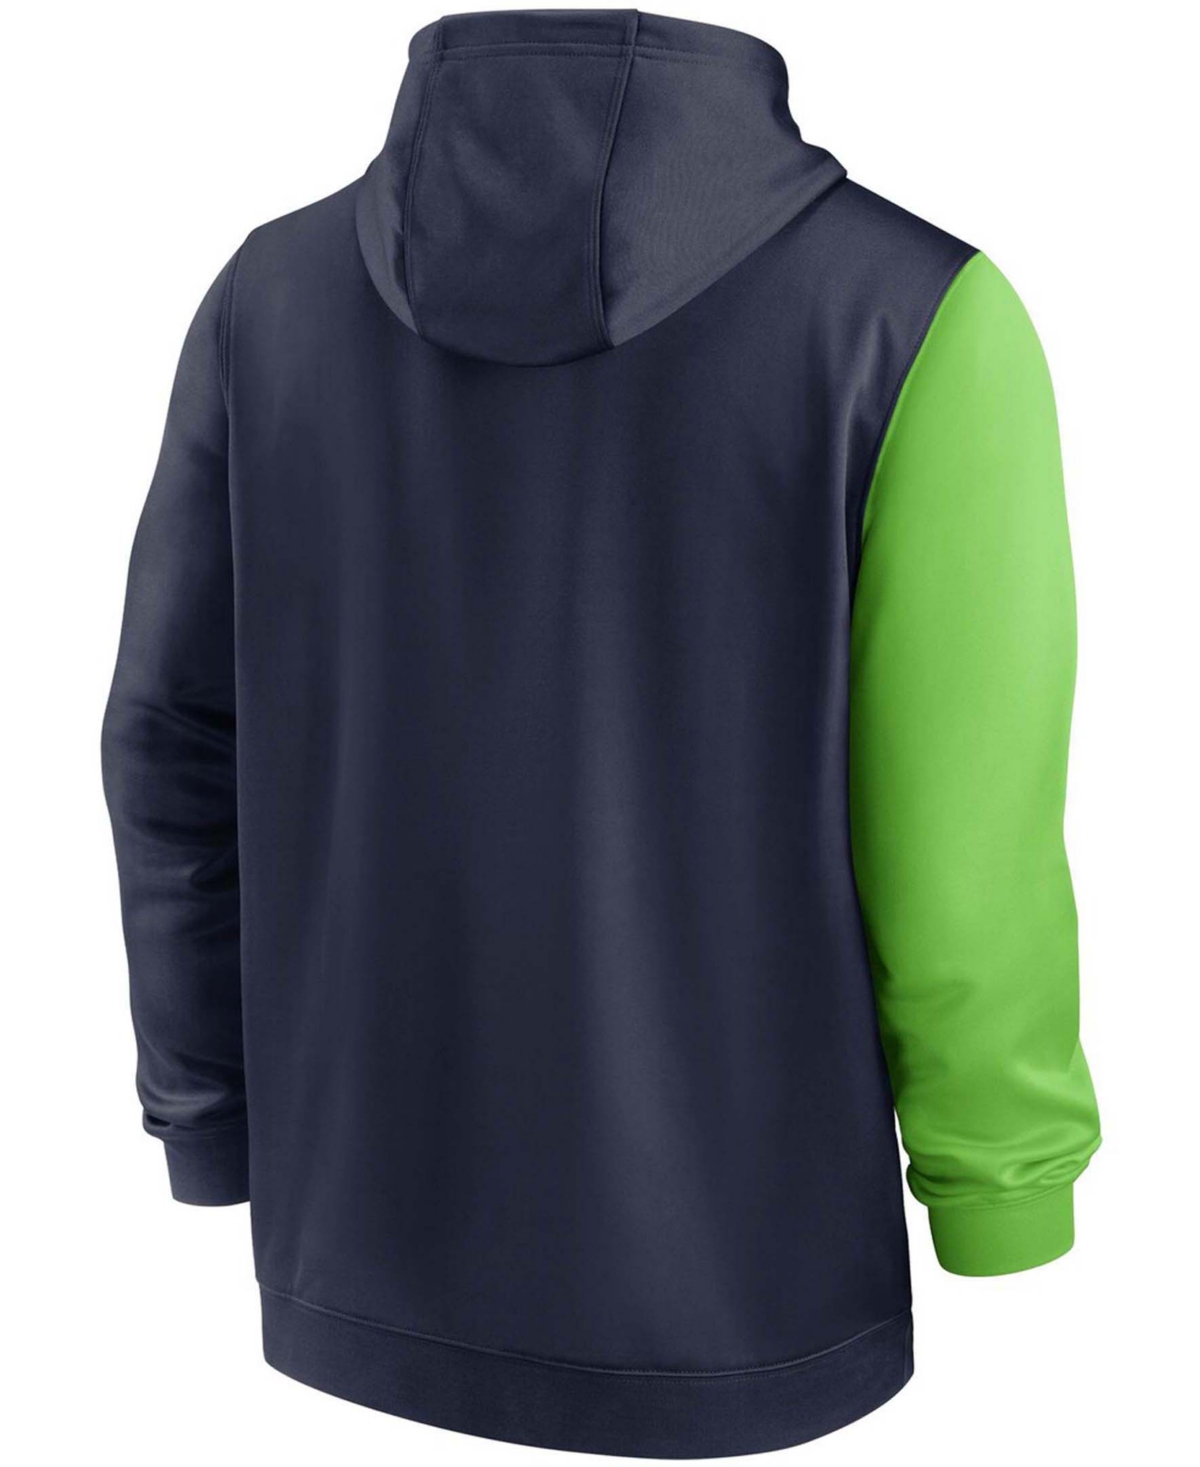 Shop Nike Men's College Navy, Neon Green Seattle Seahawks Colorblock Performance Pullover Hoodie